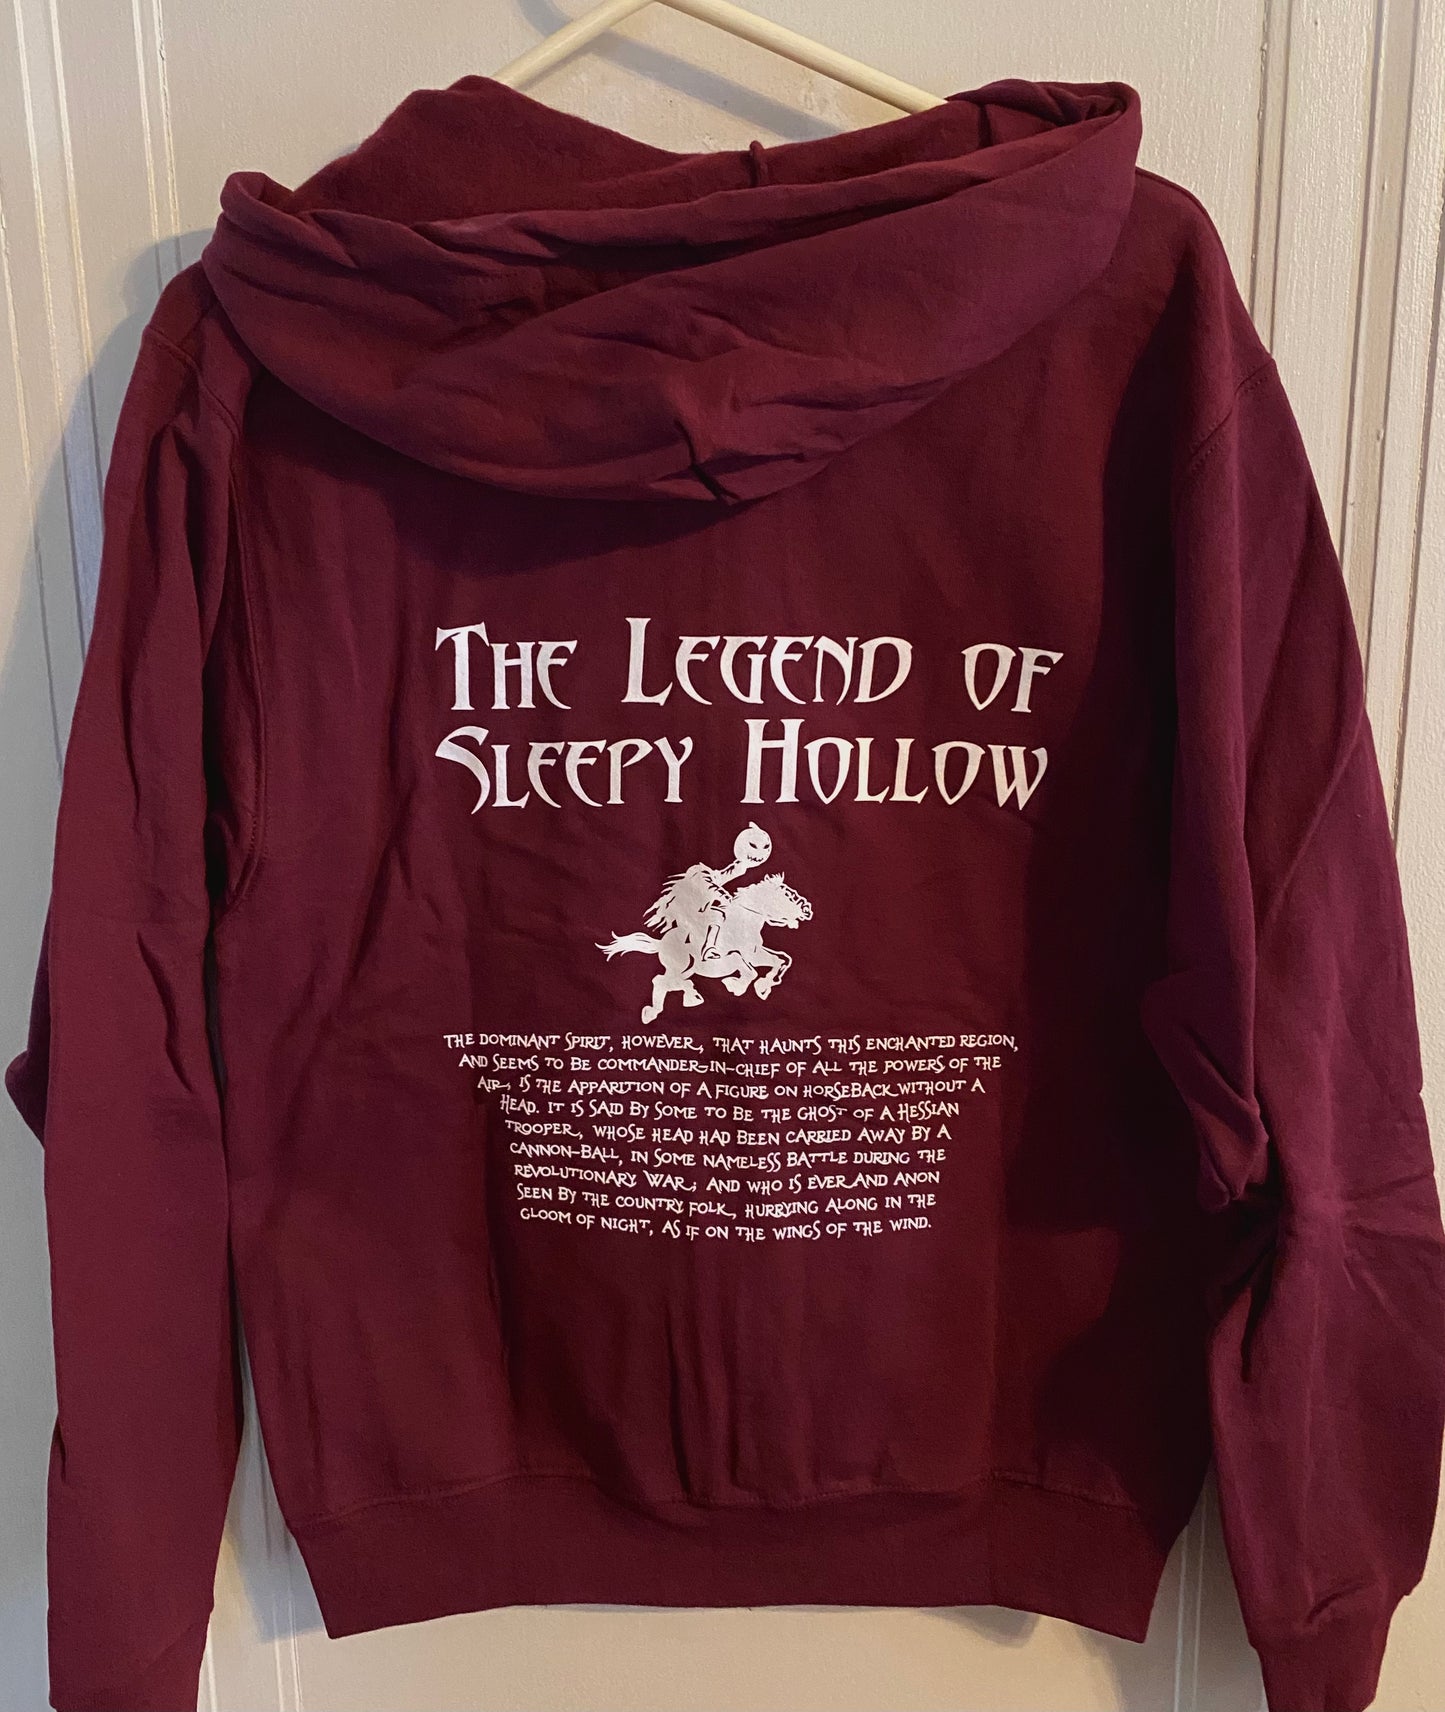 Headless Horseman Hoodies - The Legend of Sleepy Hollow